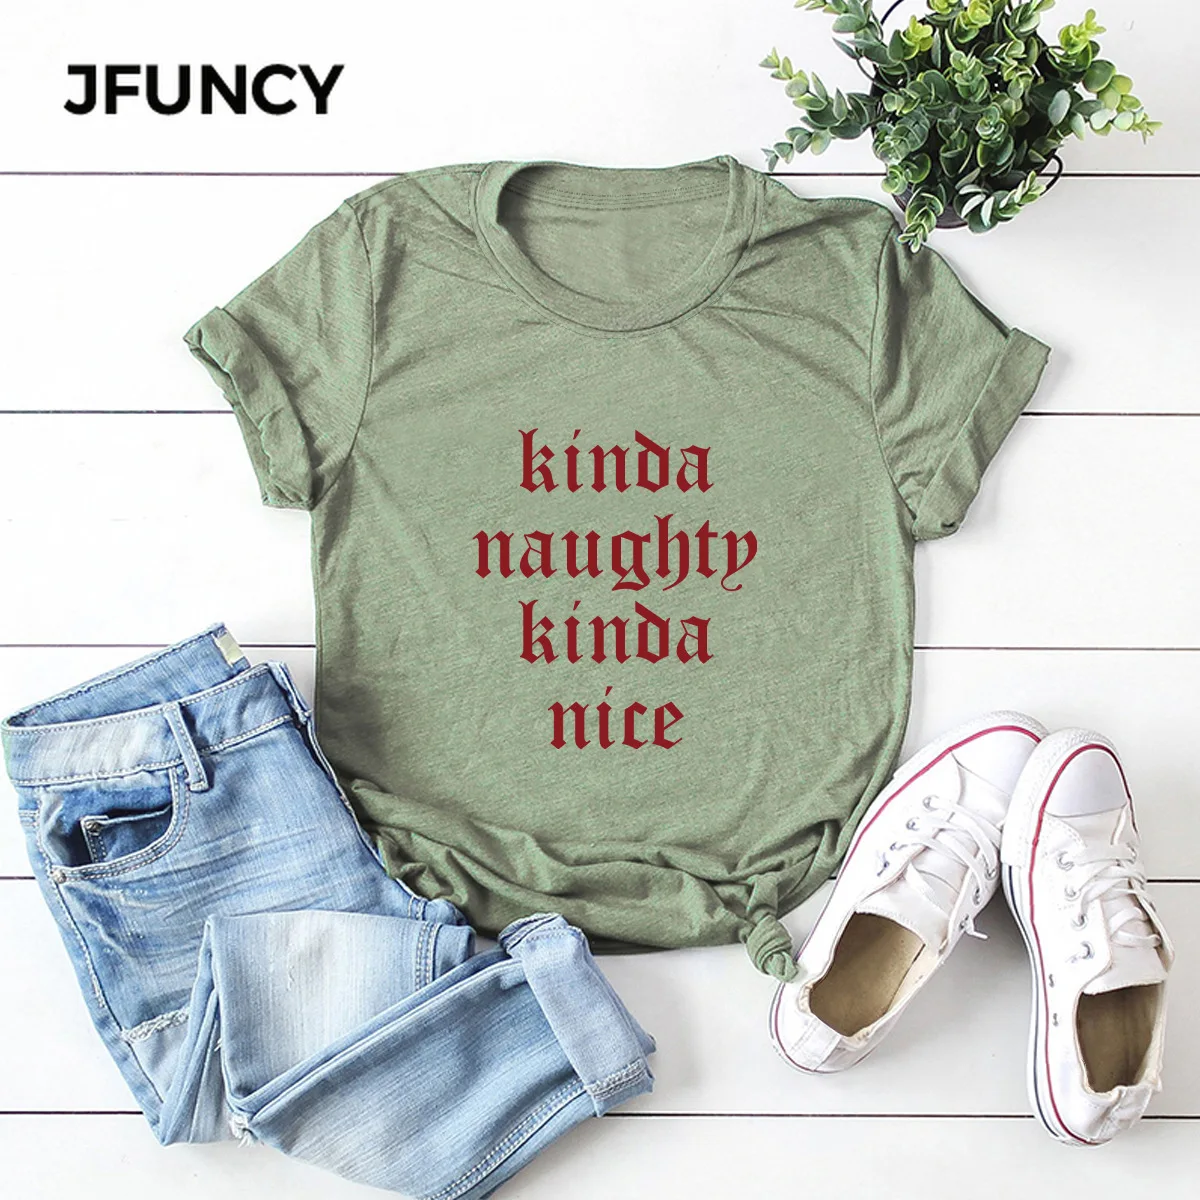 JFUNCY  Women Tops Letter Print Casual Woman Cotton T-shirt Summer Female Tee Shirt Oversize Short Sleeve Lady Tshirt